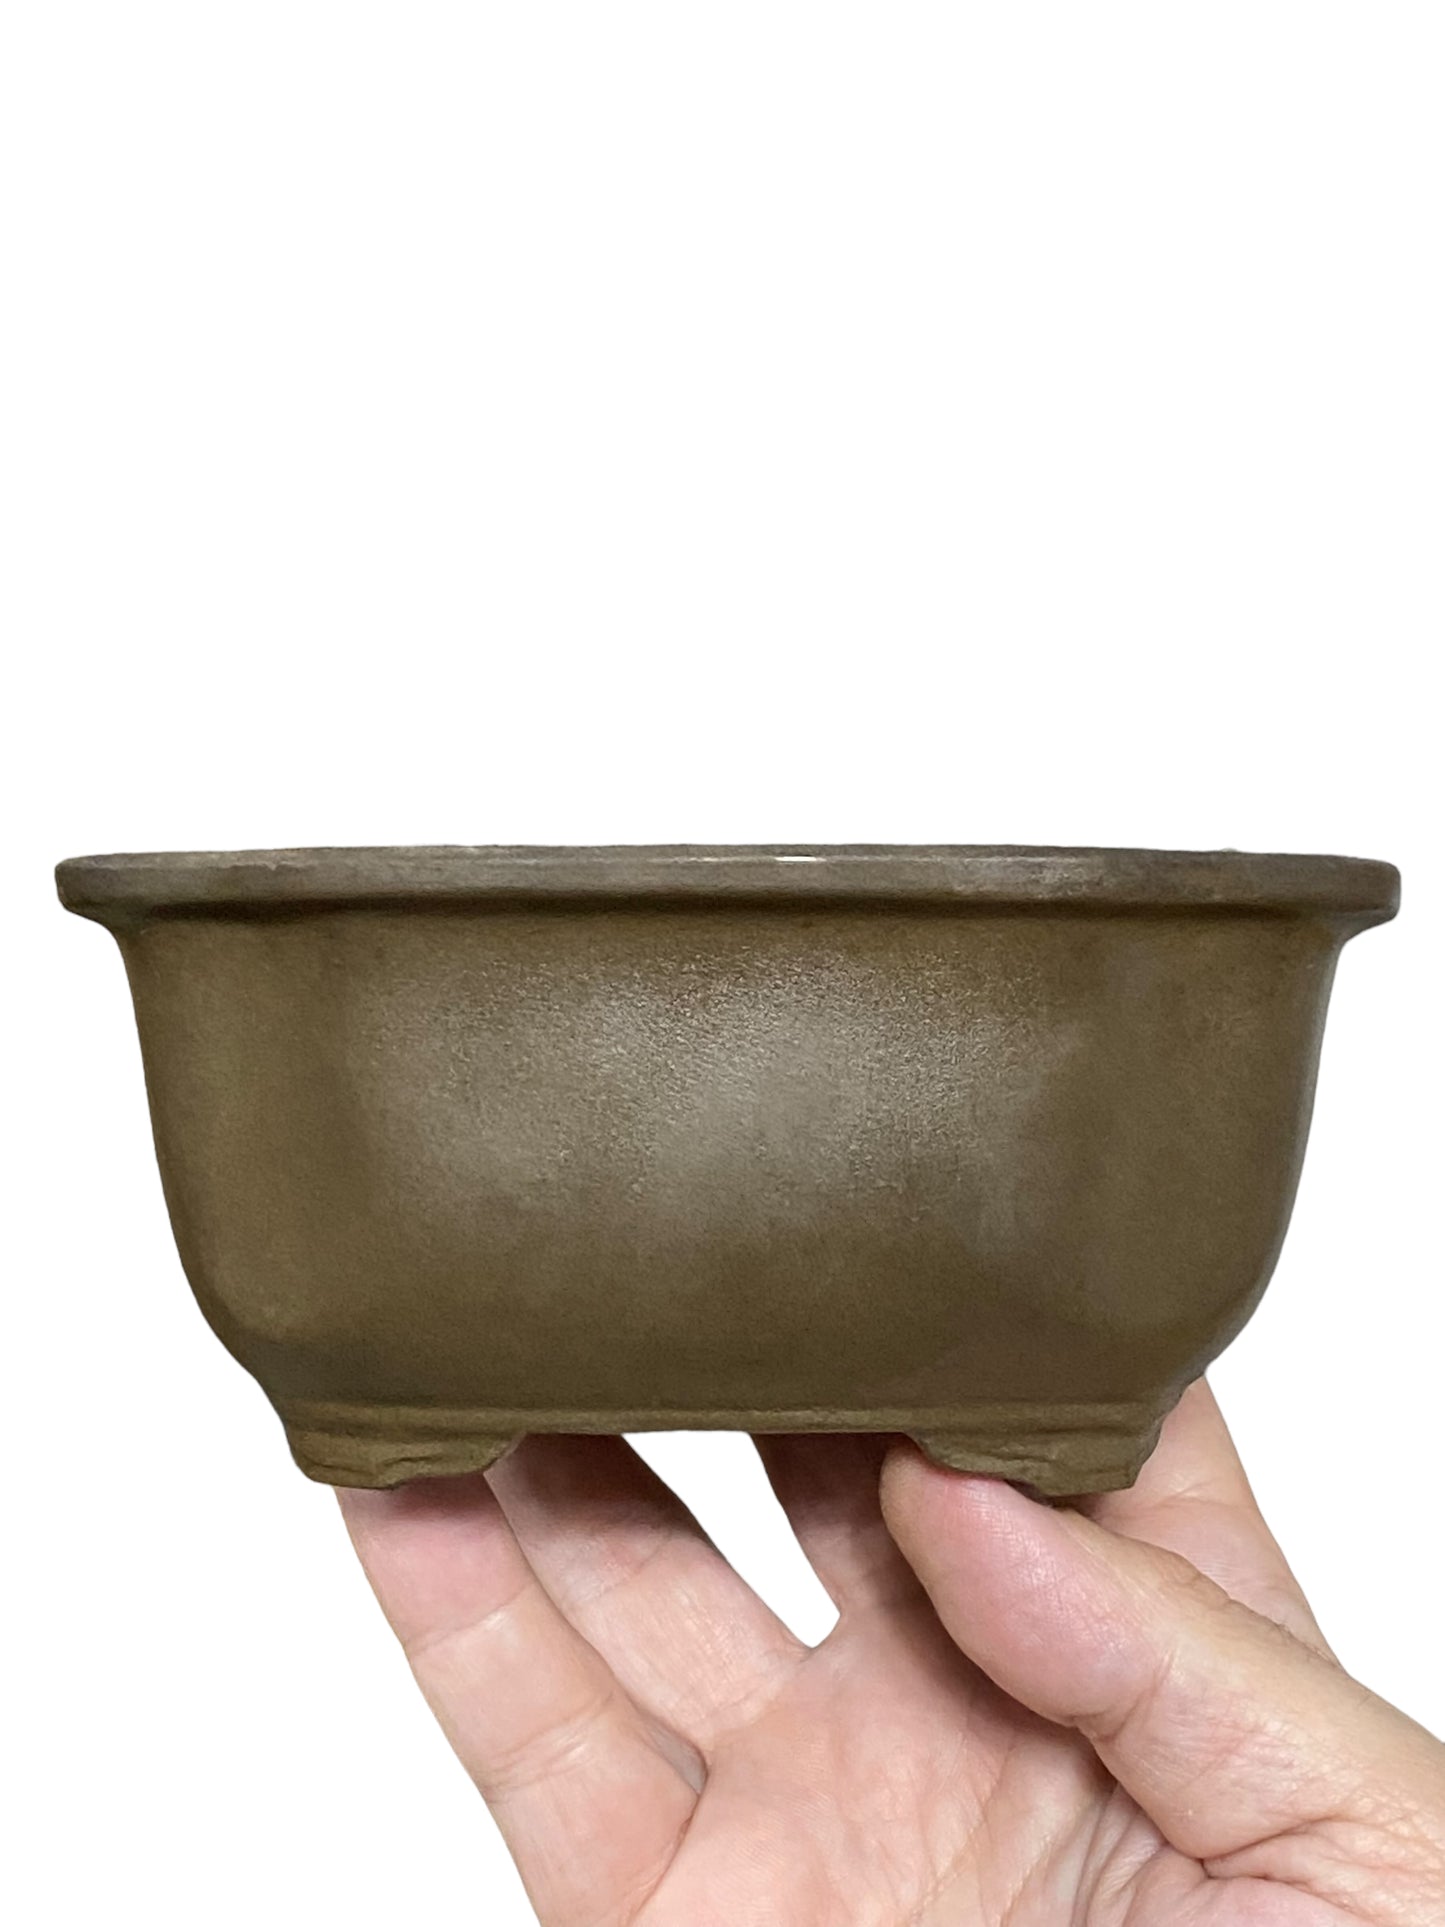 Unglazed Mokko Style Bonsai Pot from China